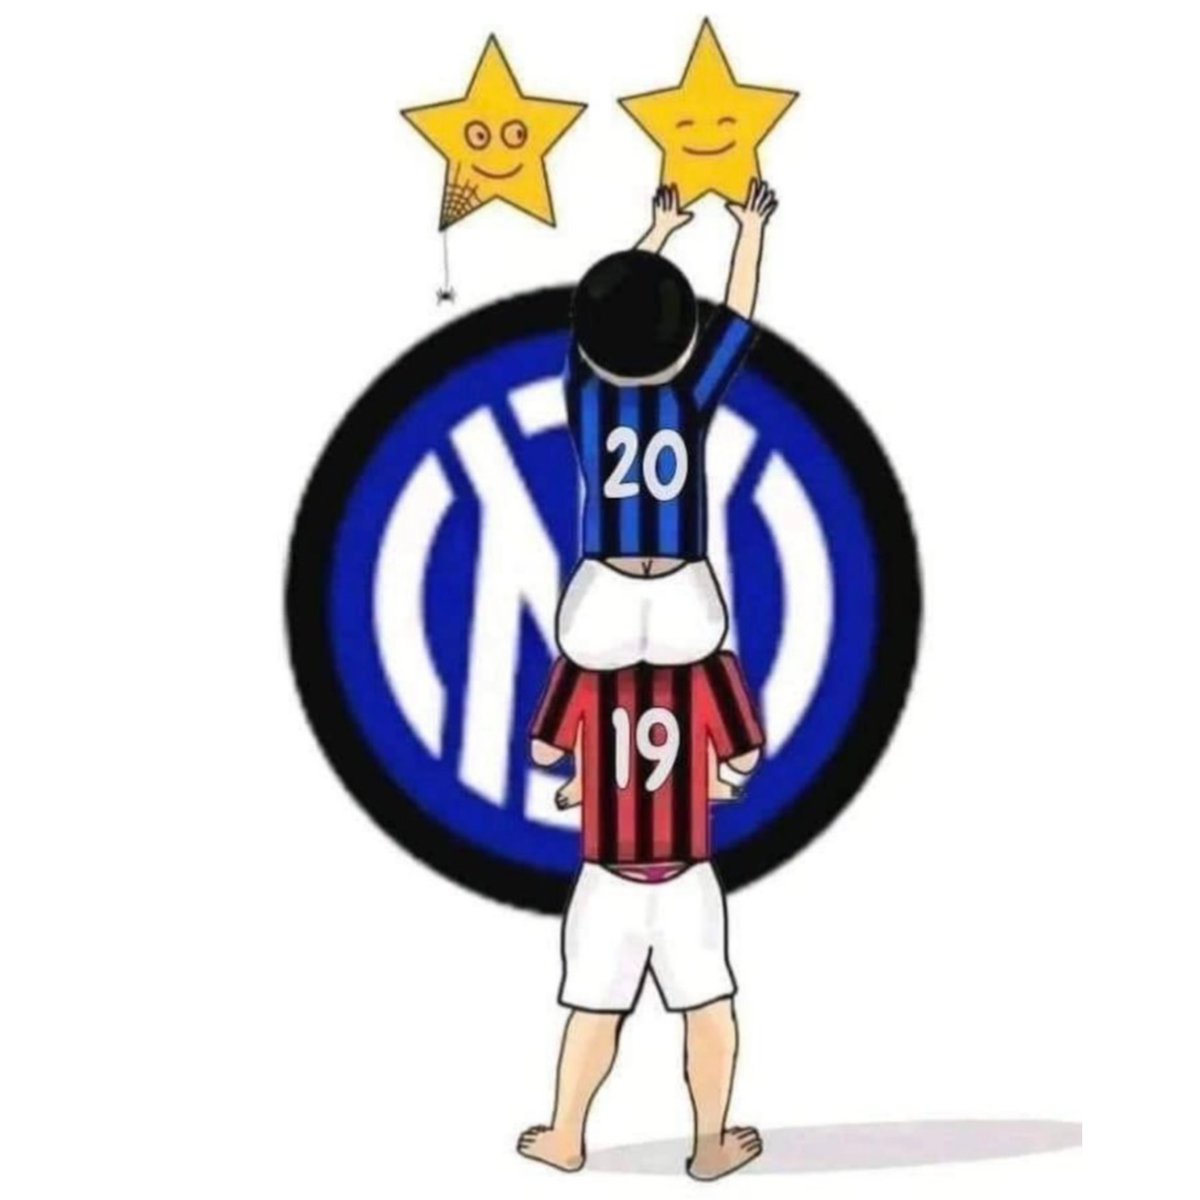 Inter's 2nd star ⭐️